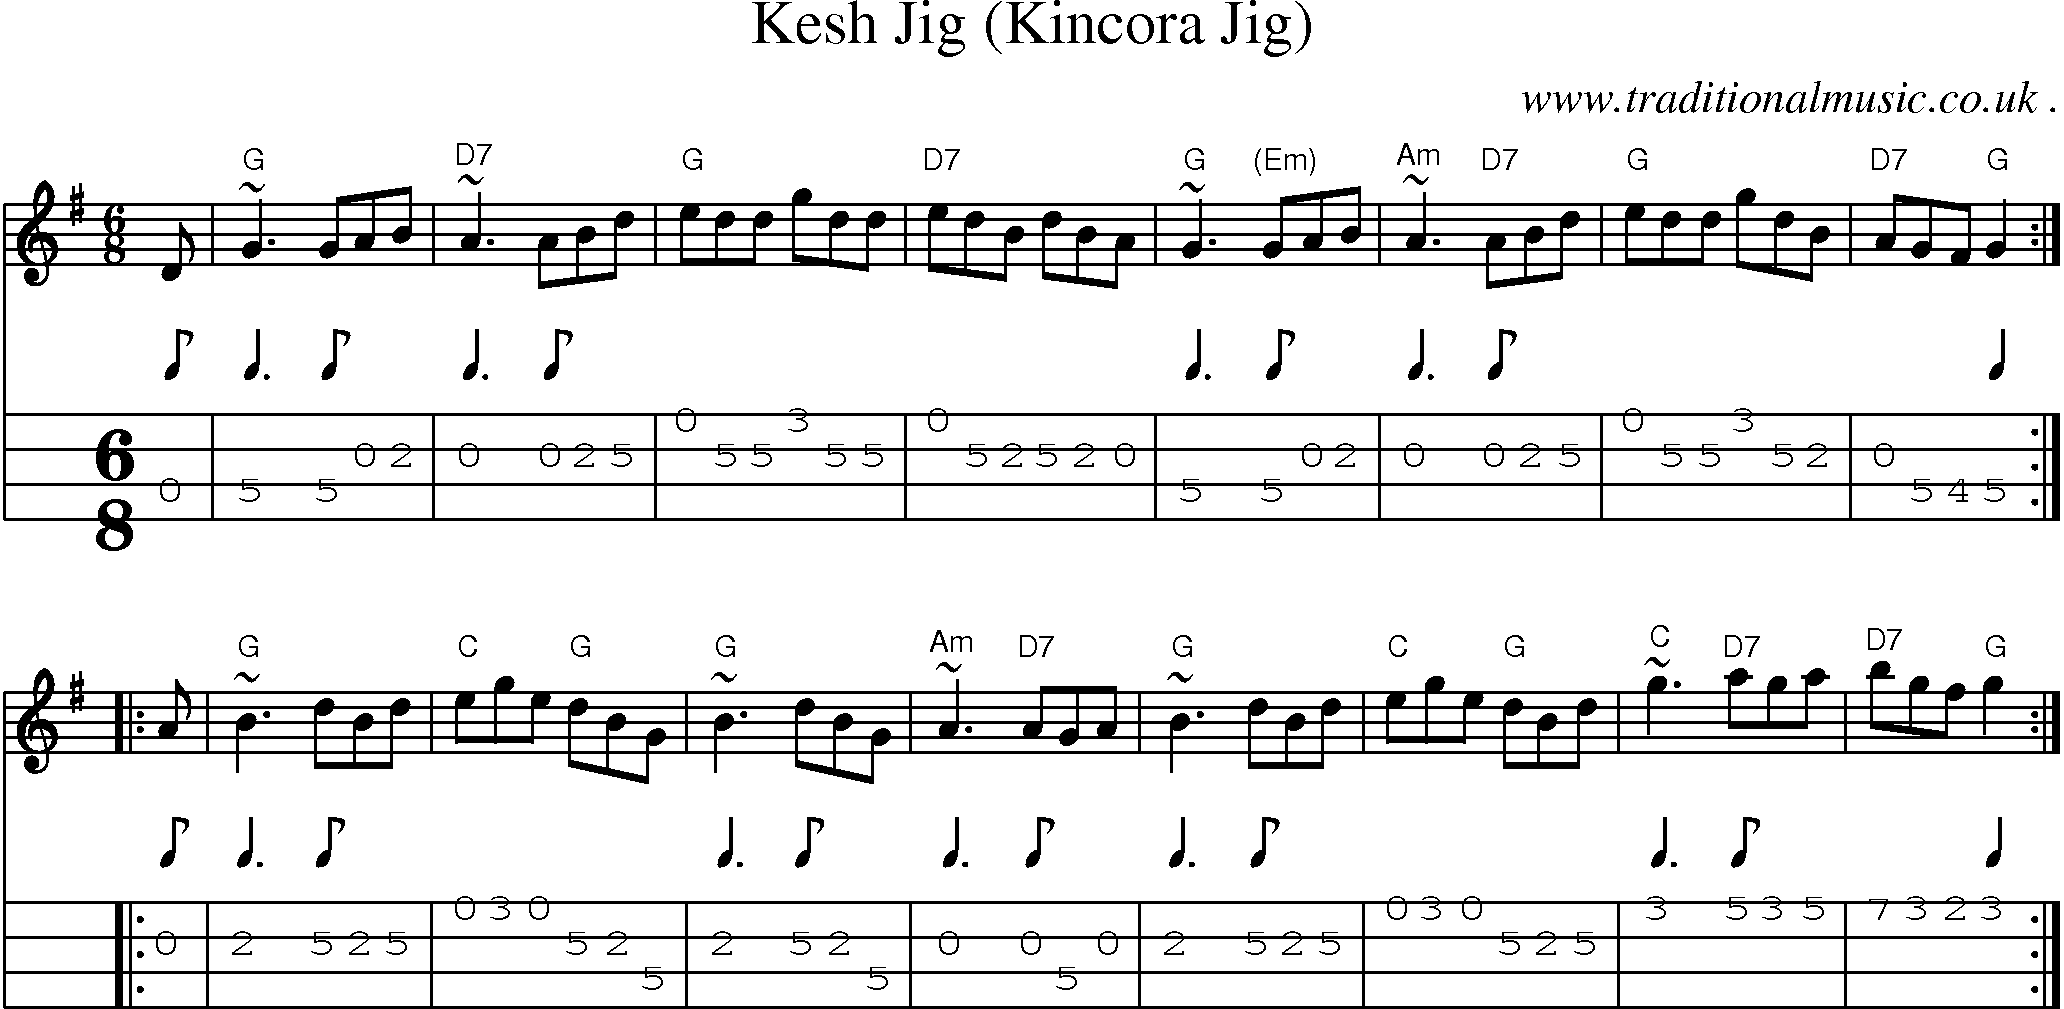 Sheet-music  score, Chords and Mandolin Tabs for Kesh Jig Kincora Jig